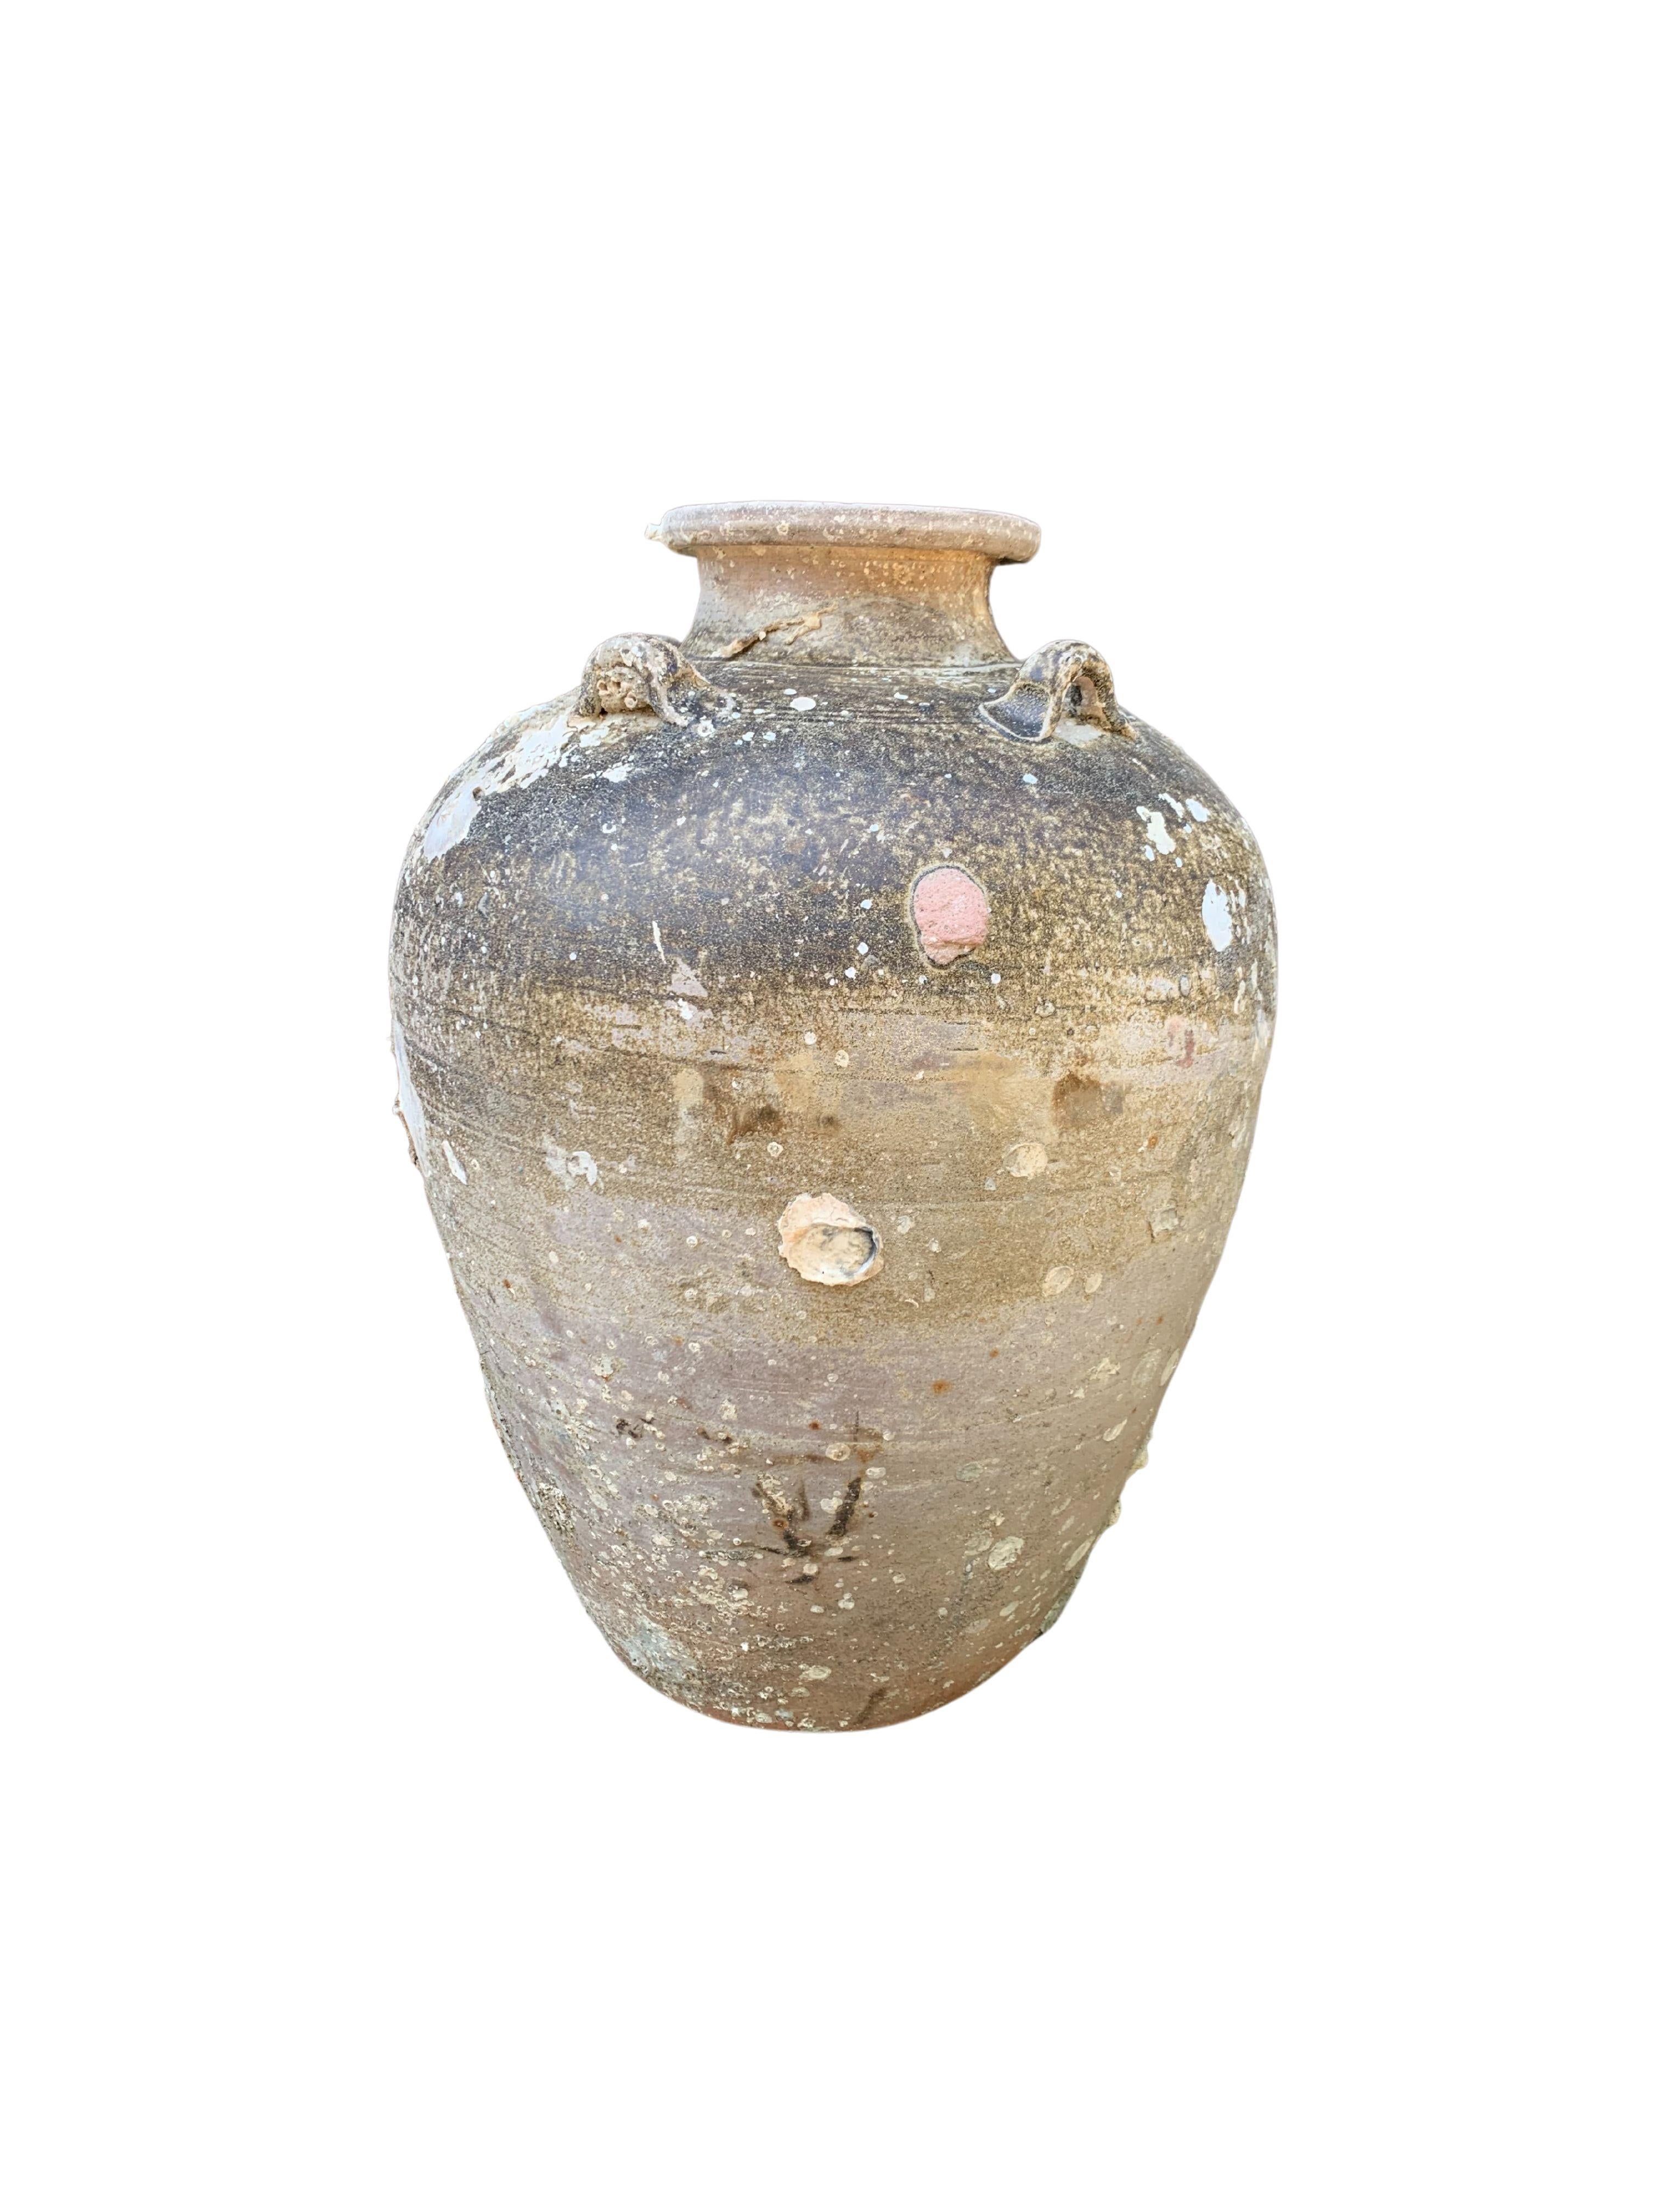 Ceramic Sawankhalok Ship Wreck Jar from the Kingdom of Sukhothai, Thailand, 16th Century